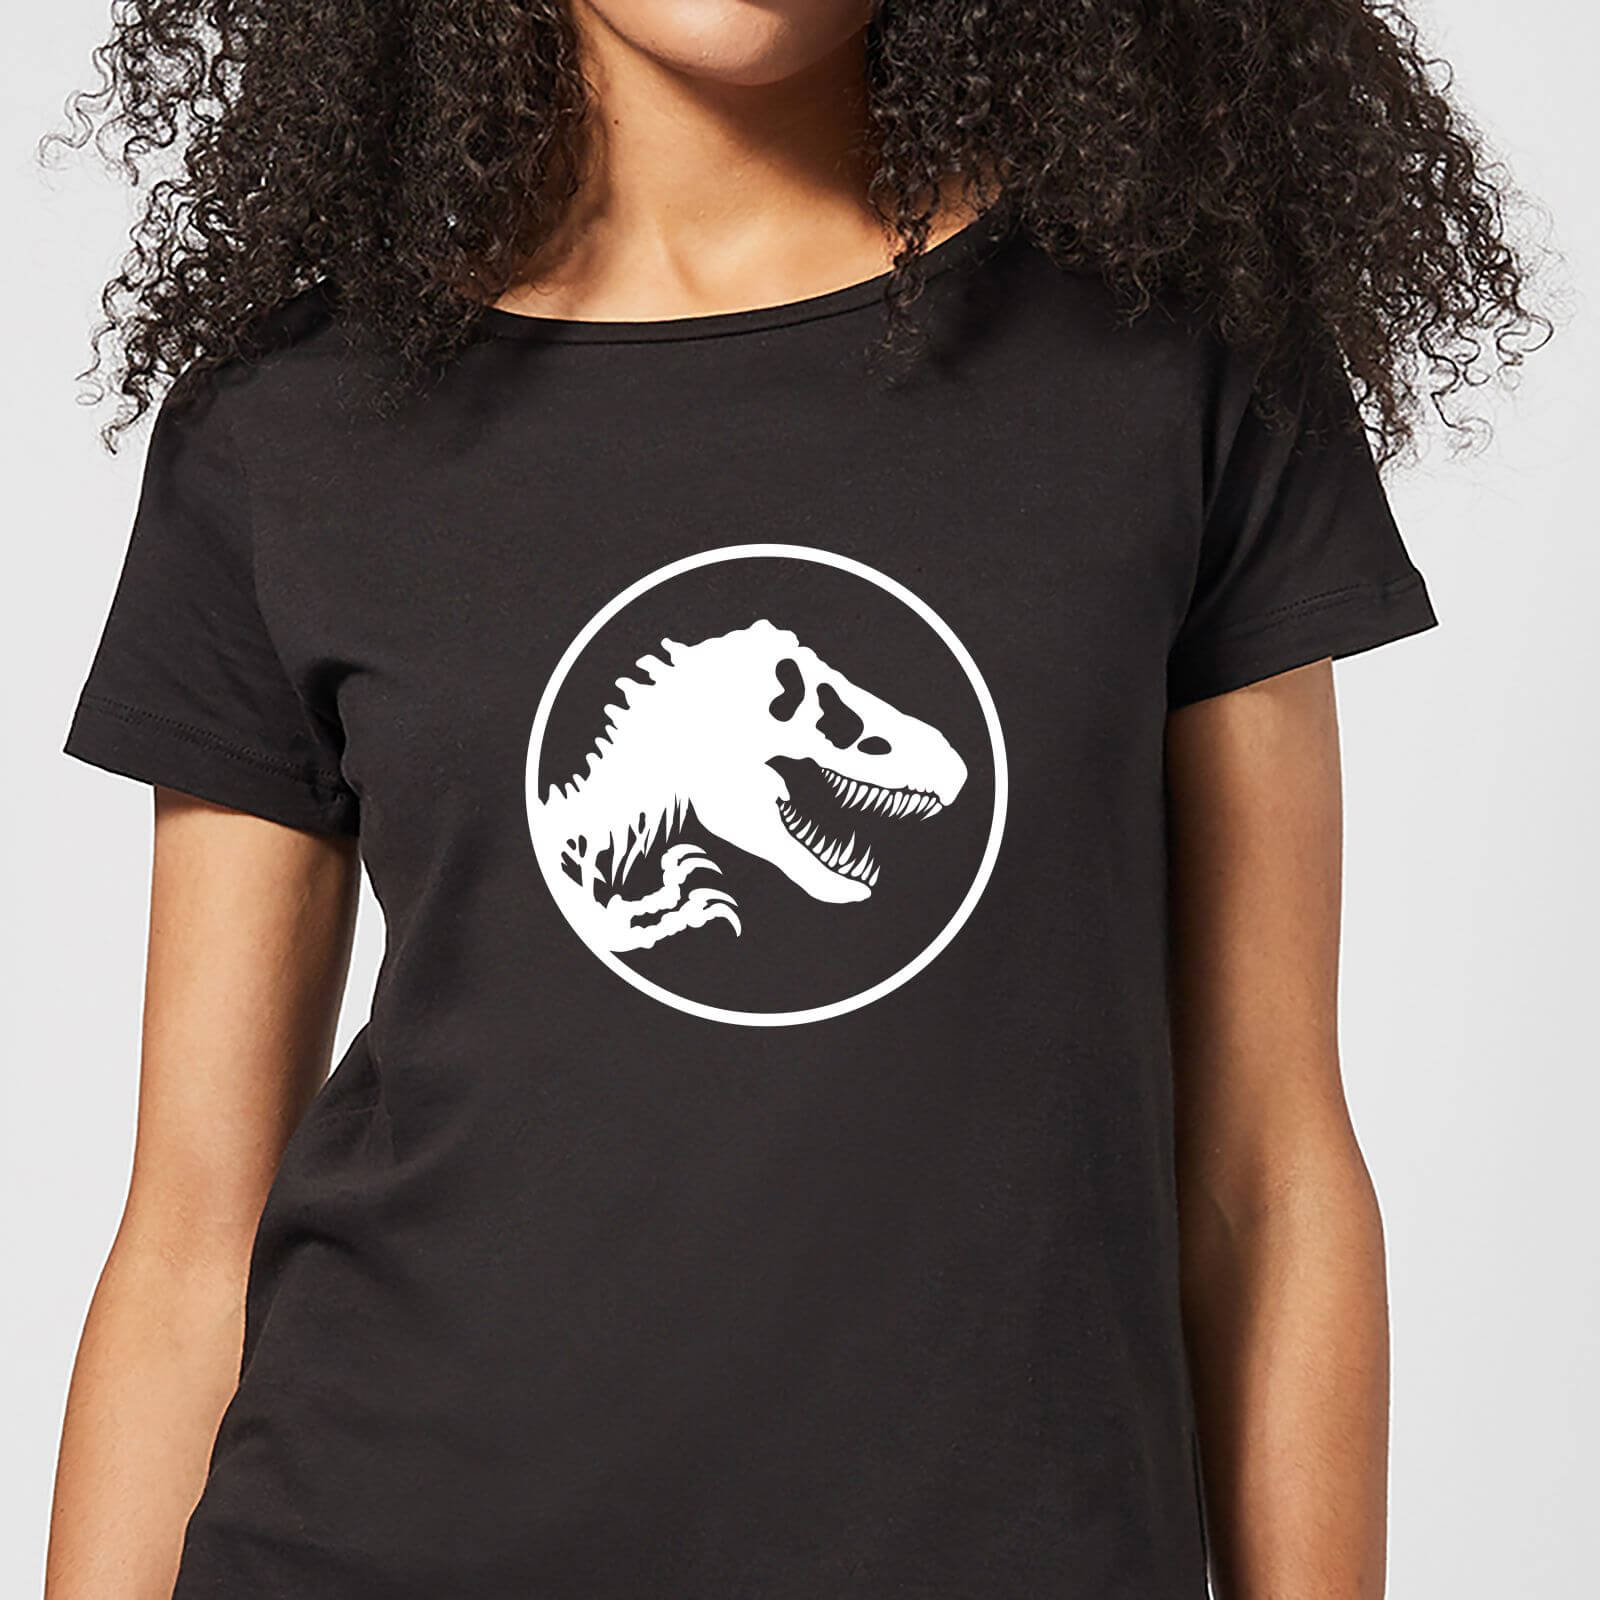 Jurassic Park Circle Logo Women's T-Shirt - Black - S